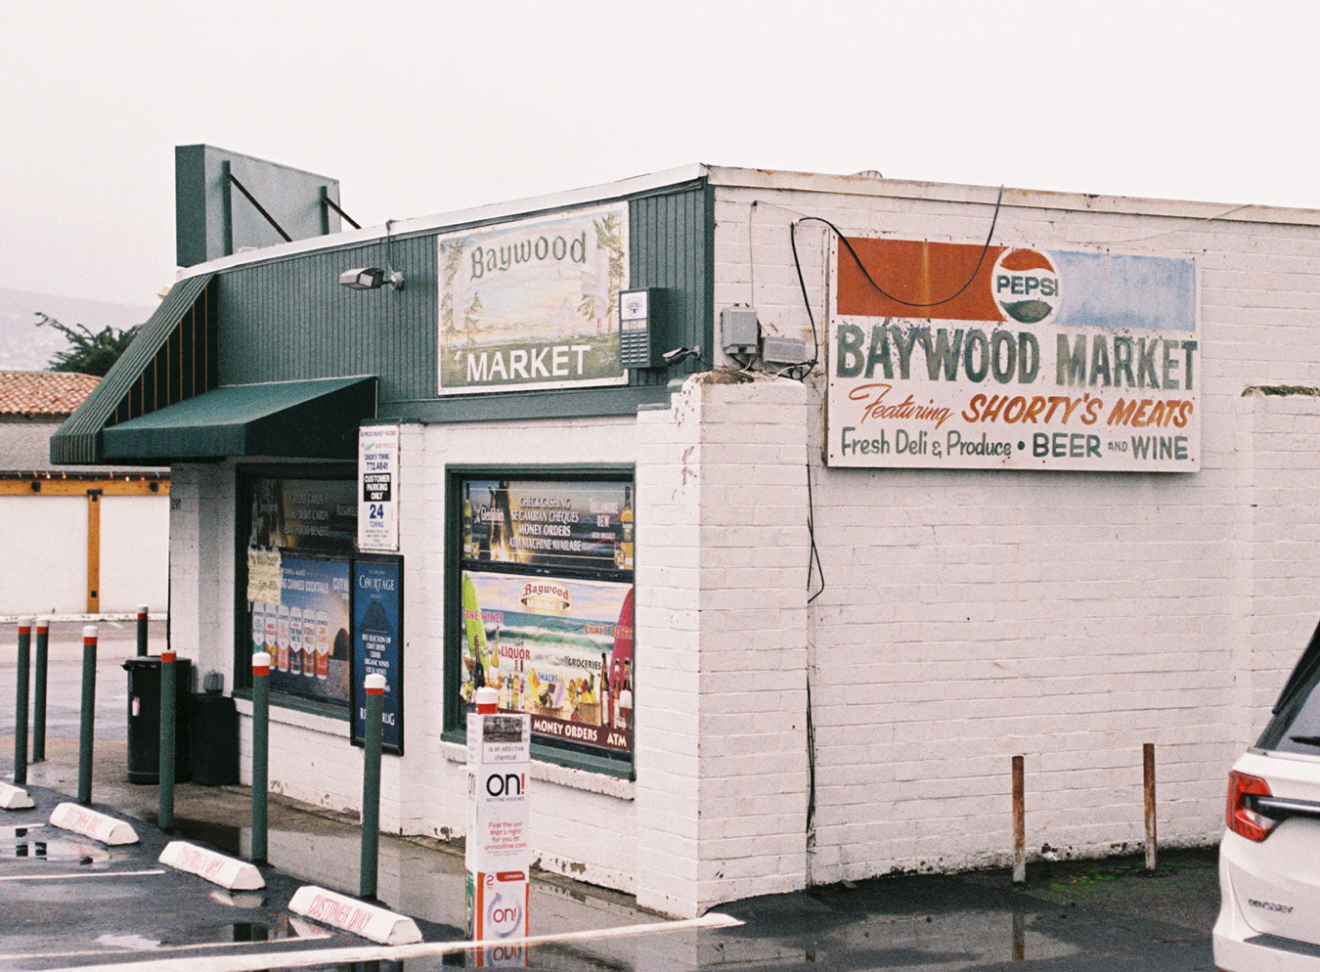 Baywood Market in Baywood-Los Osos. Photograph by Jordan Romanoff.